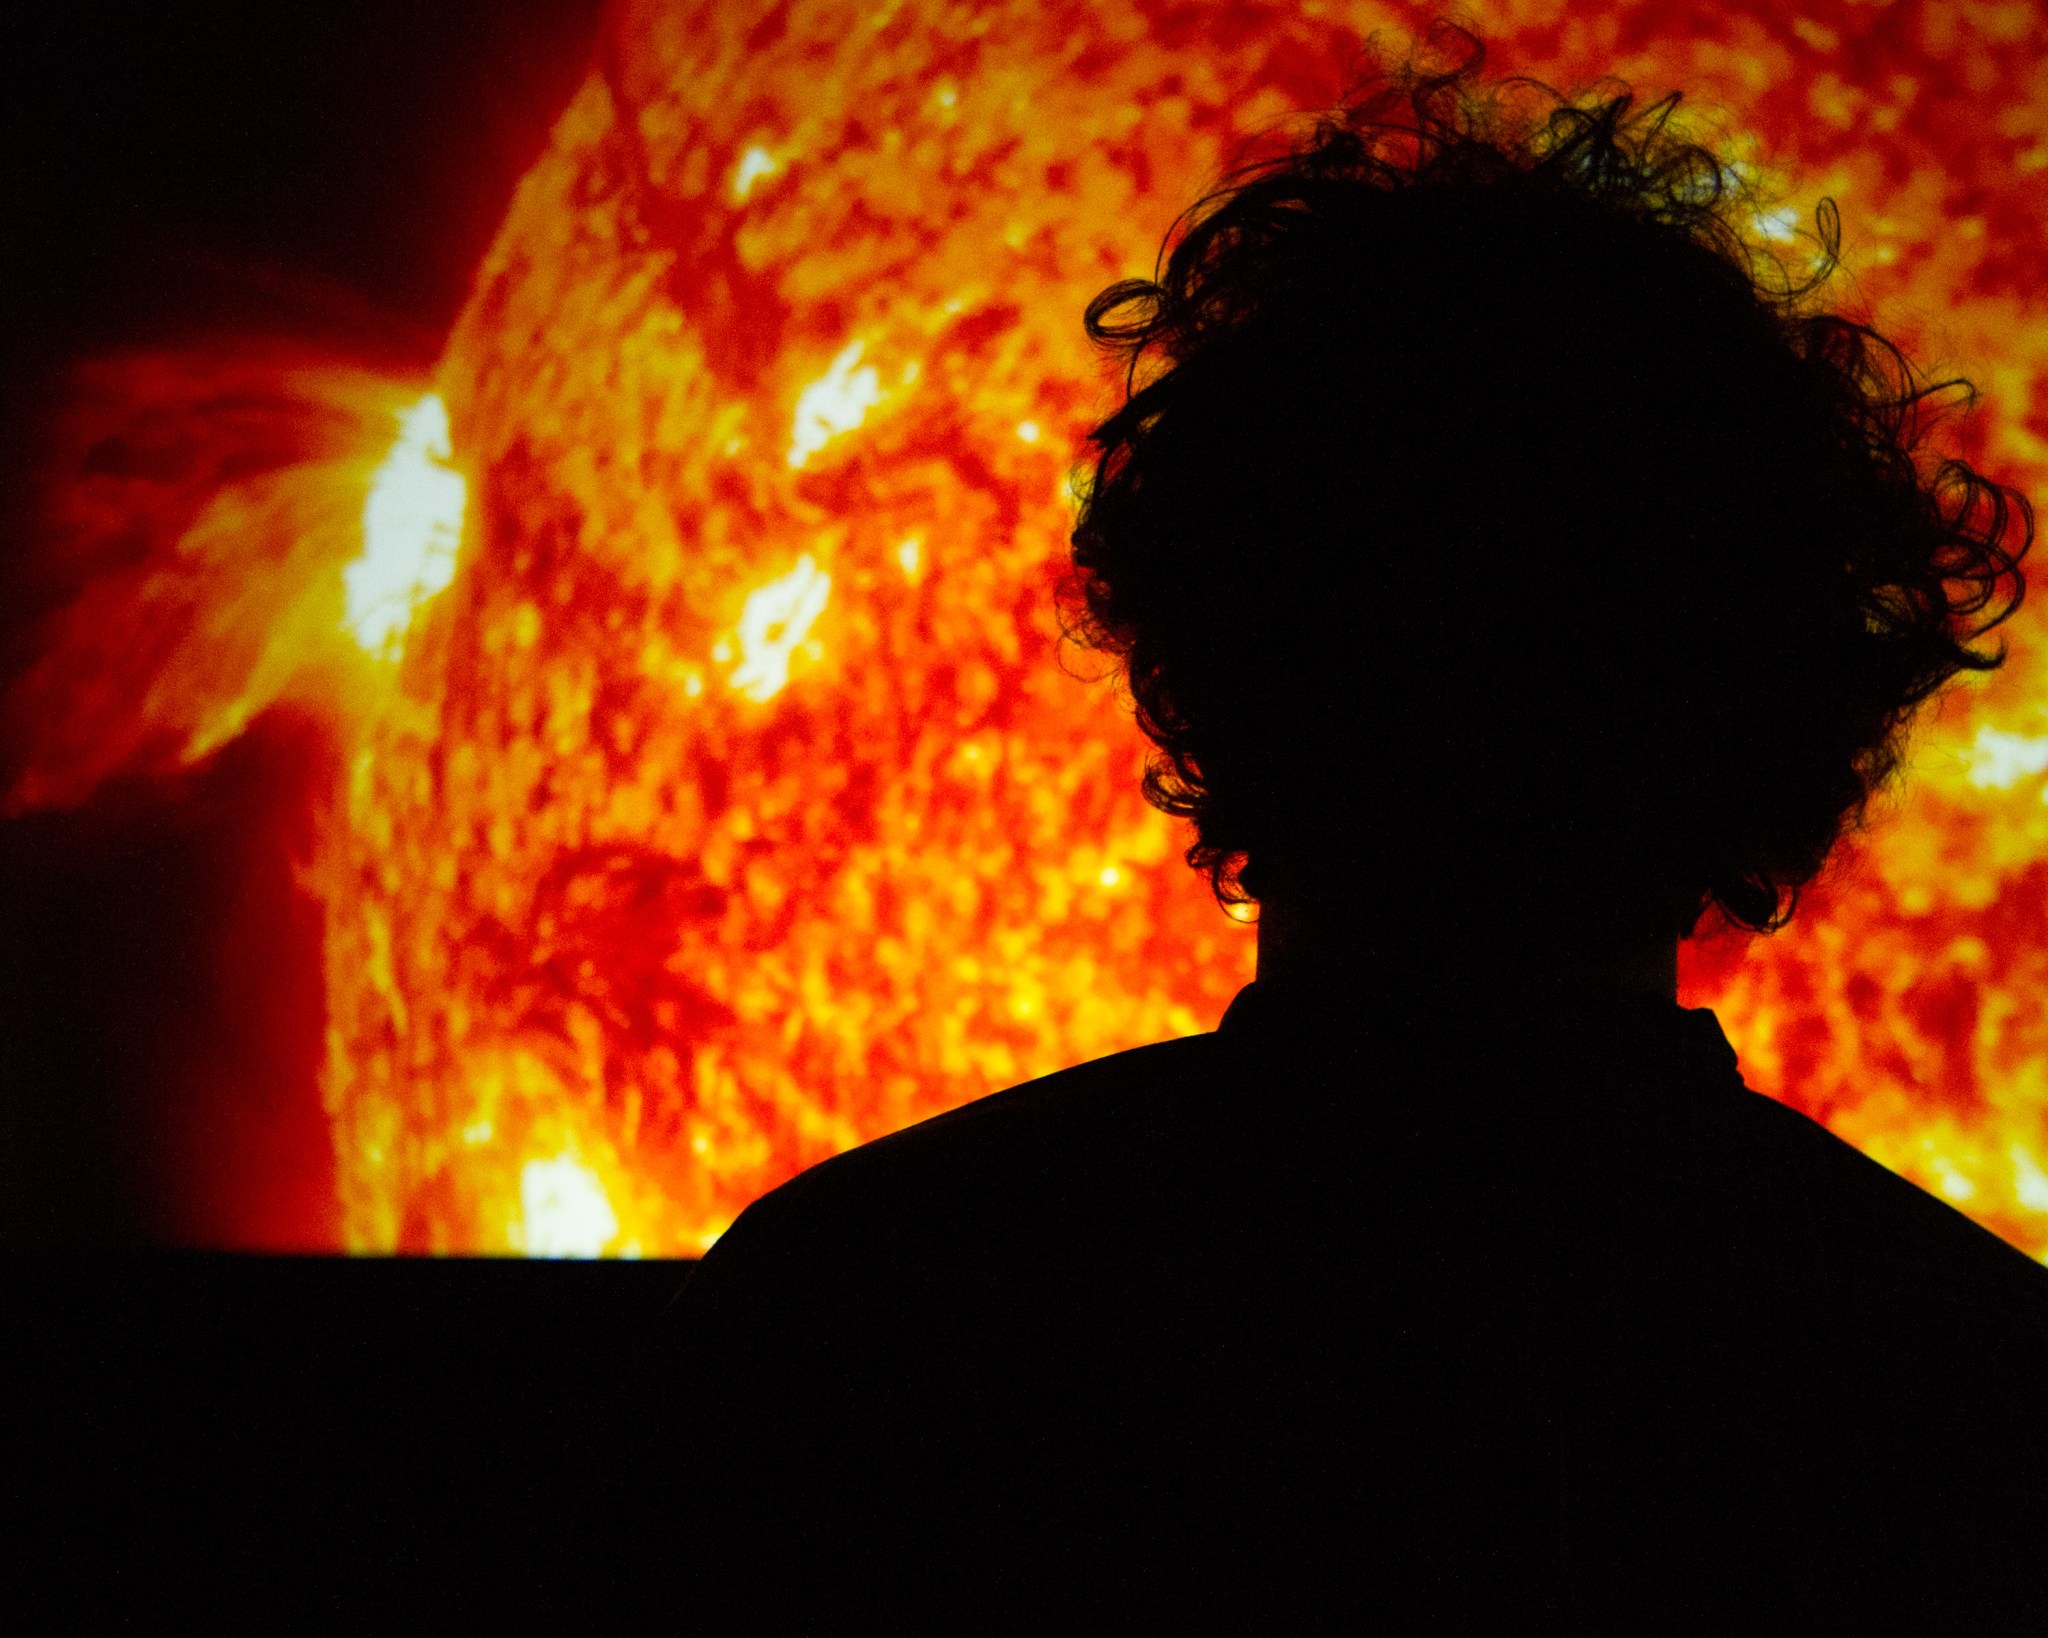 silhouette of Solarium exhibit attendee viewing image of the sun